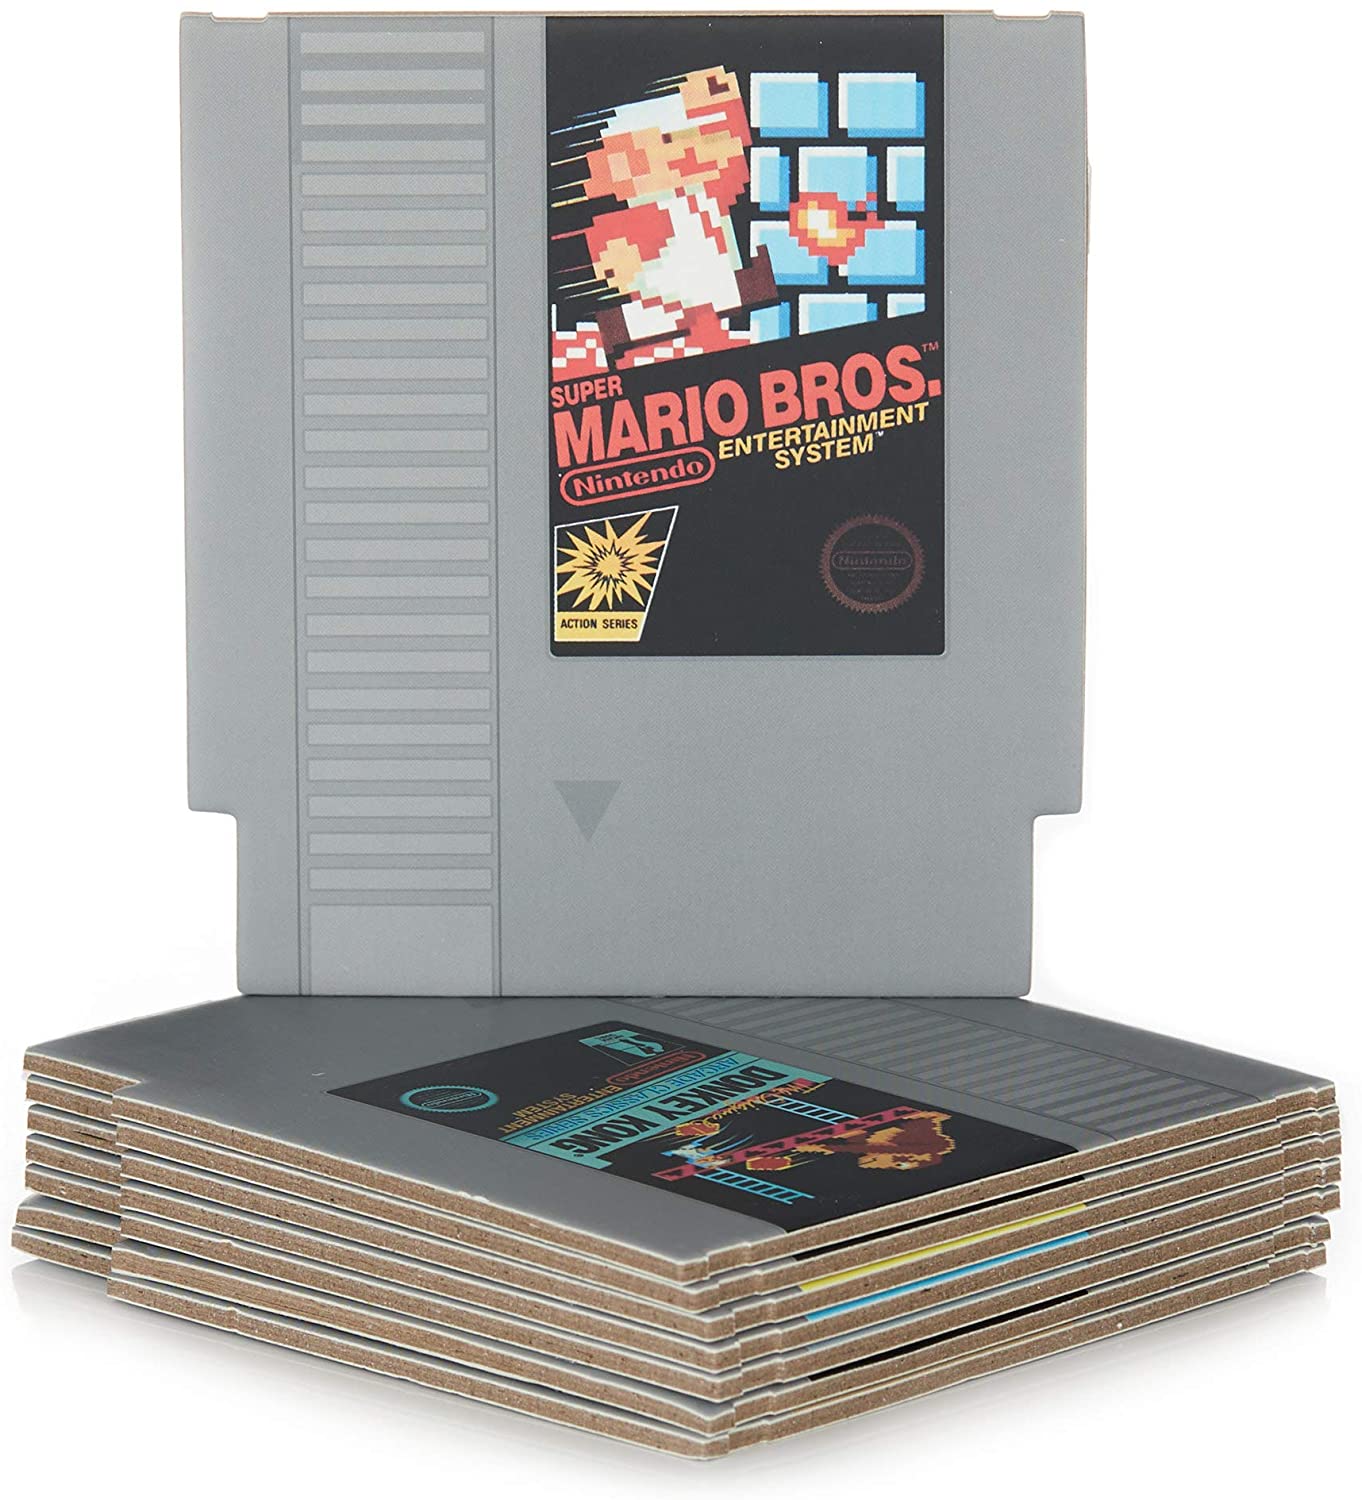 Retro NES Cartridge Coasters for Drinks | Classic Nintendo Video Game Room Decor